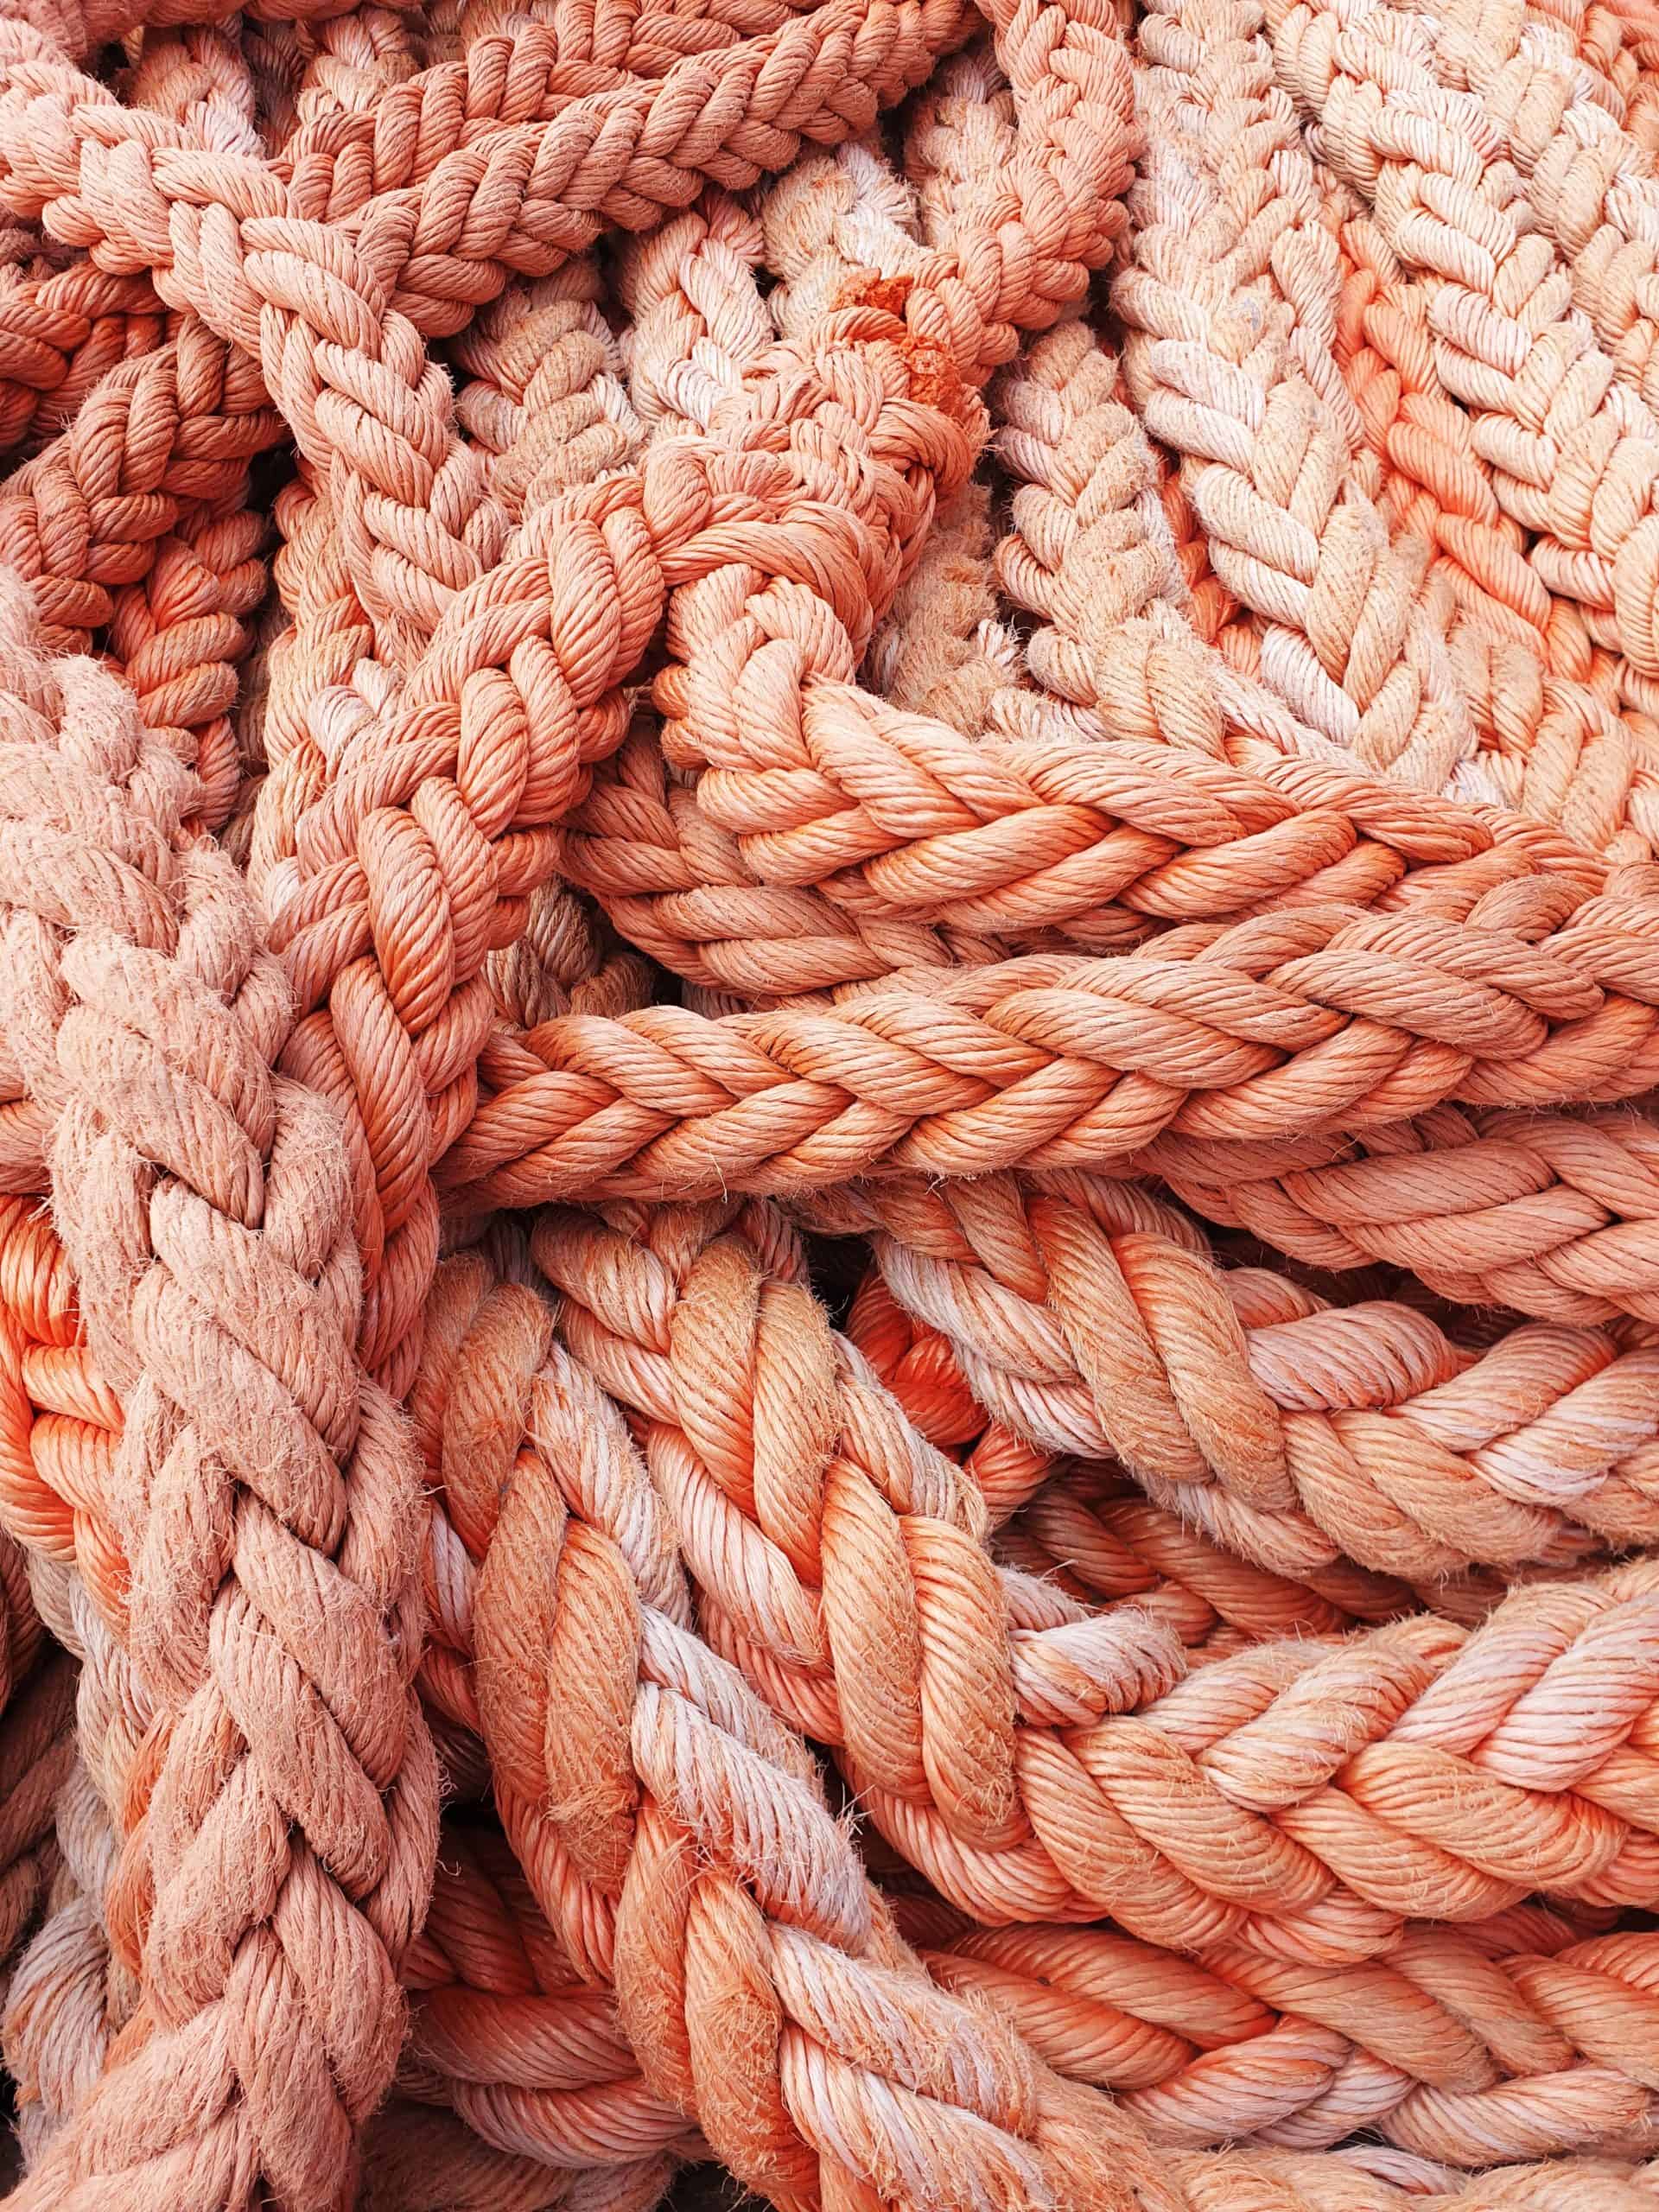 nylon rope recycling